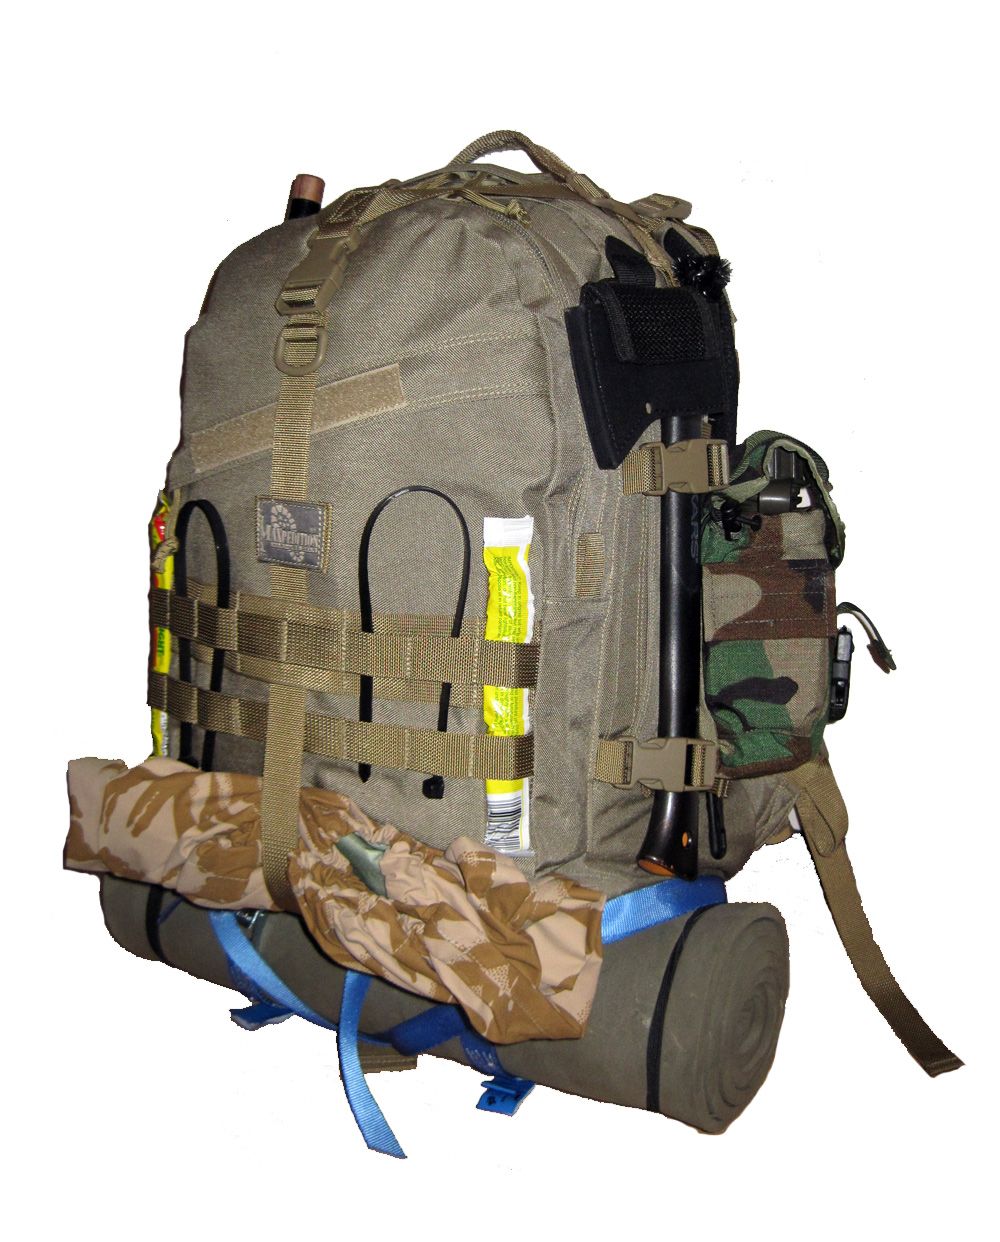 Survival Bug Out Bag. Emergency Survival Kit, Bug Out Bag Survival Kits ...